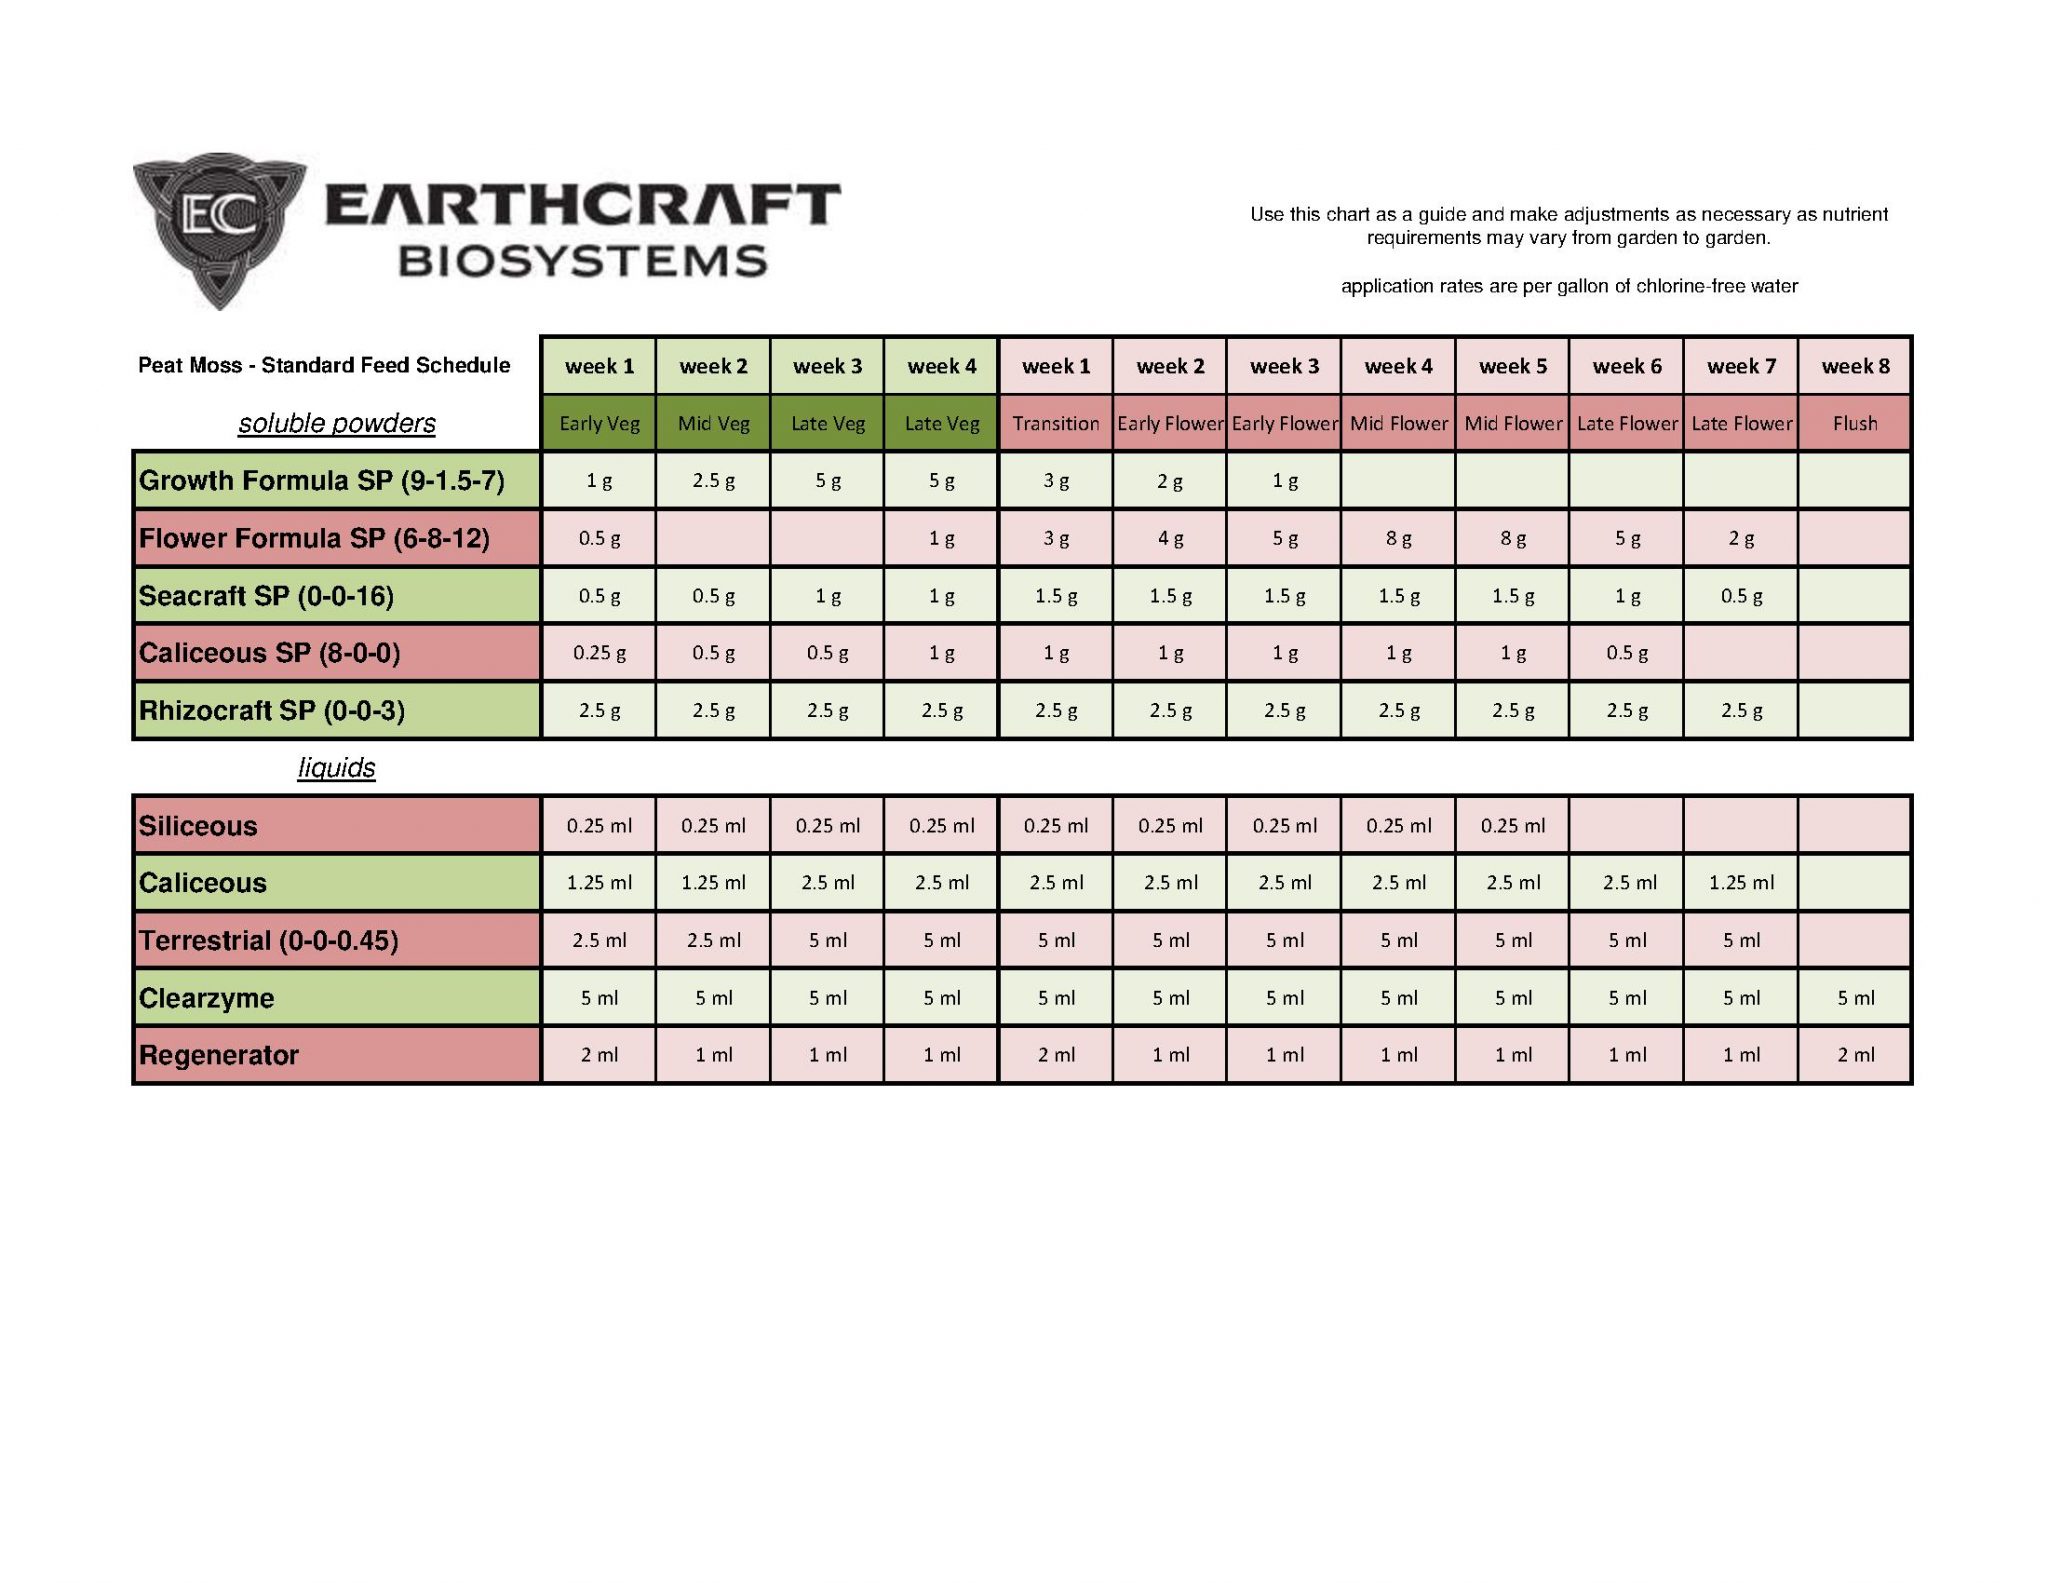 tinywow_Copy of Earthcraft Biosystems Feed Chart - Peat_7647400_1